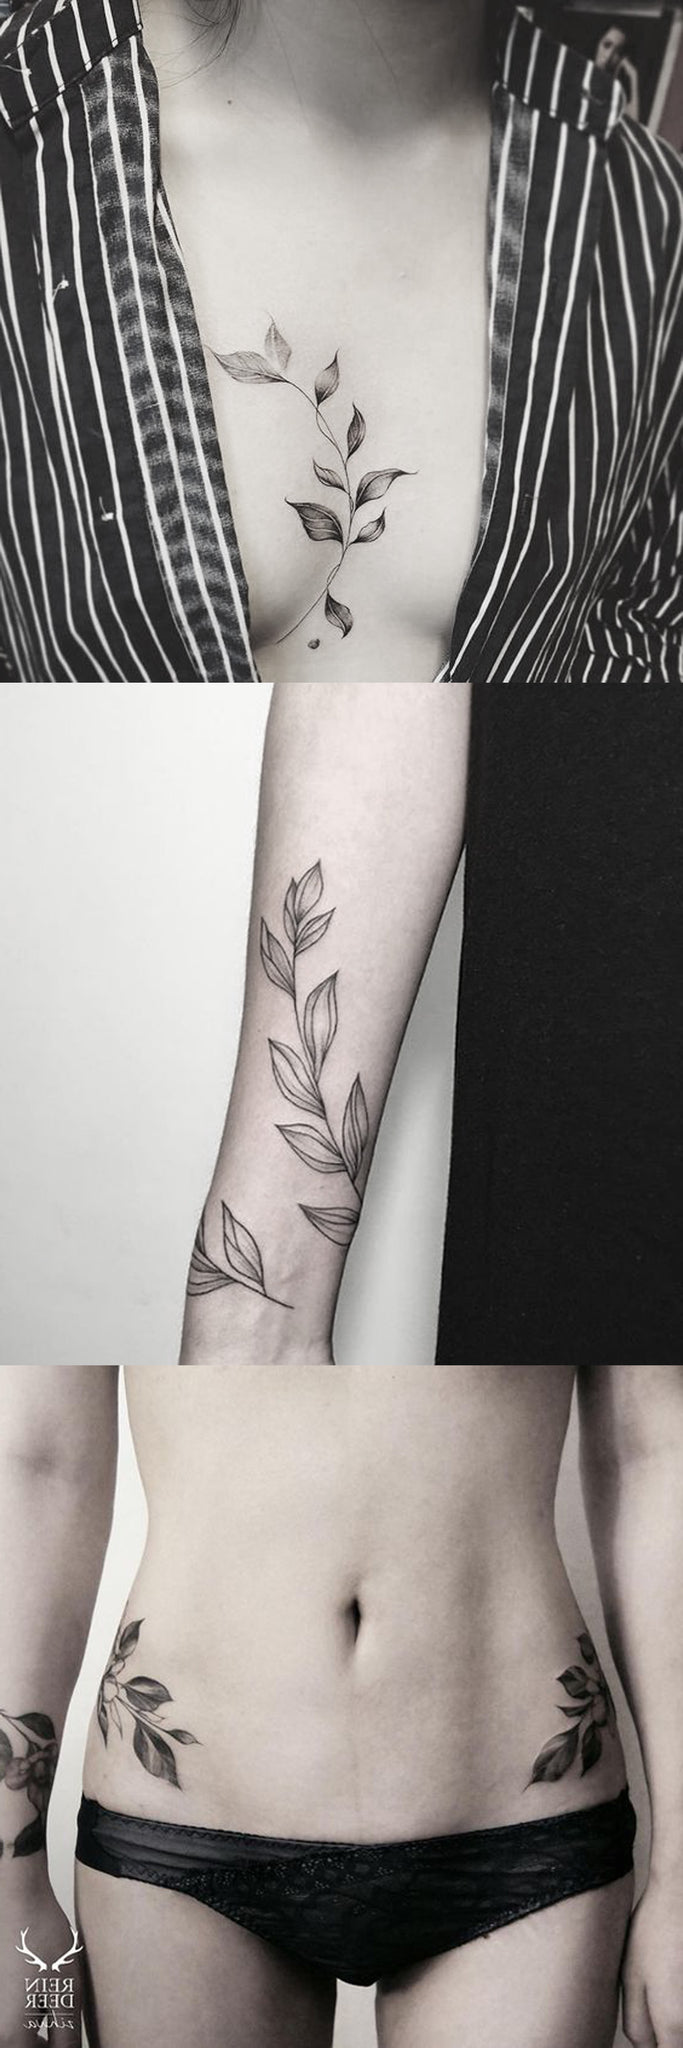 Black and White Large Flower Leaf Sternum Tattoo - Vine Arm Sleeve Hip Tat - MyBodiArt.com